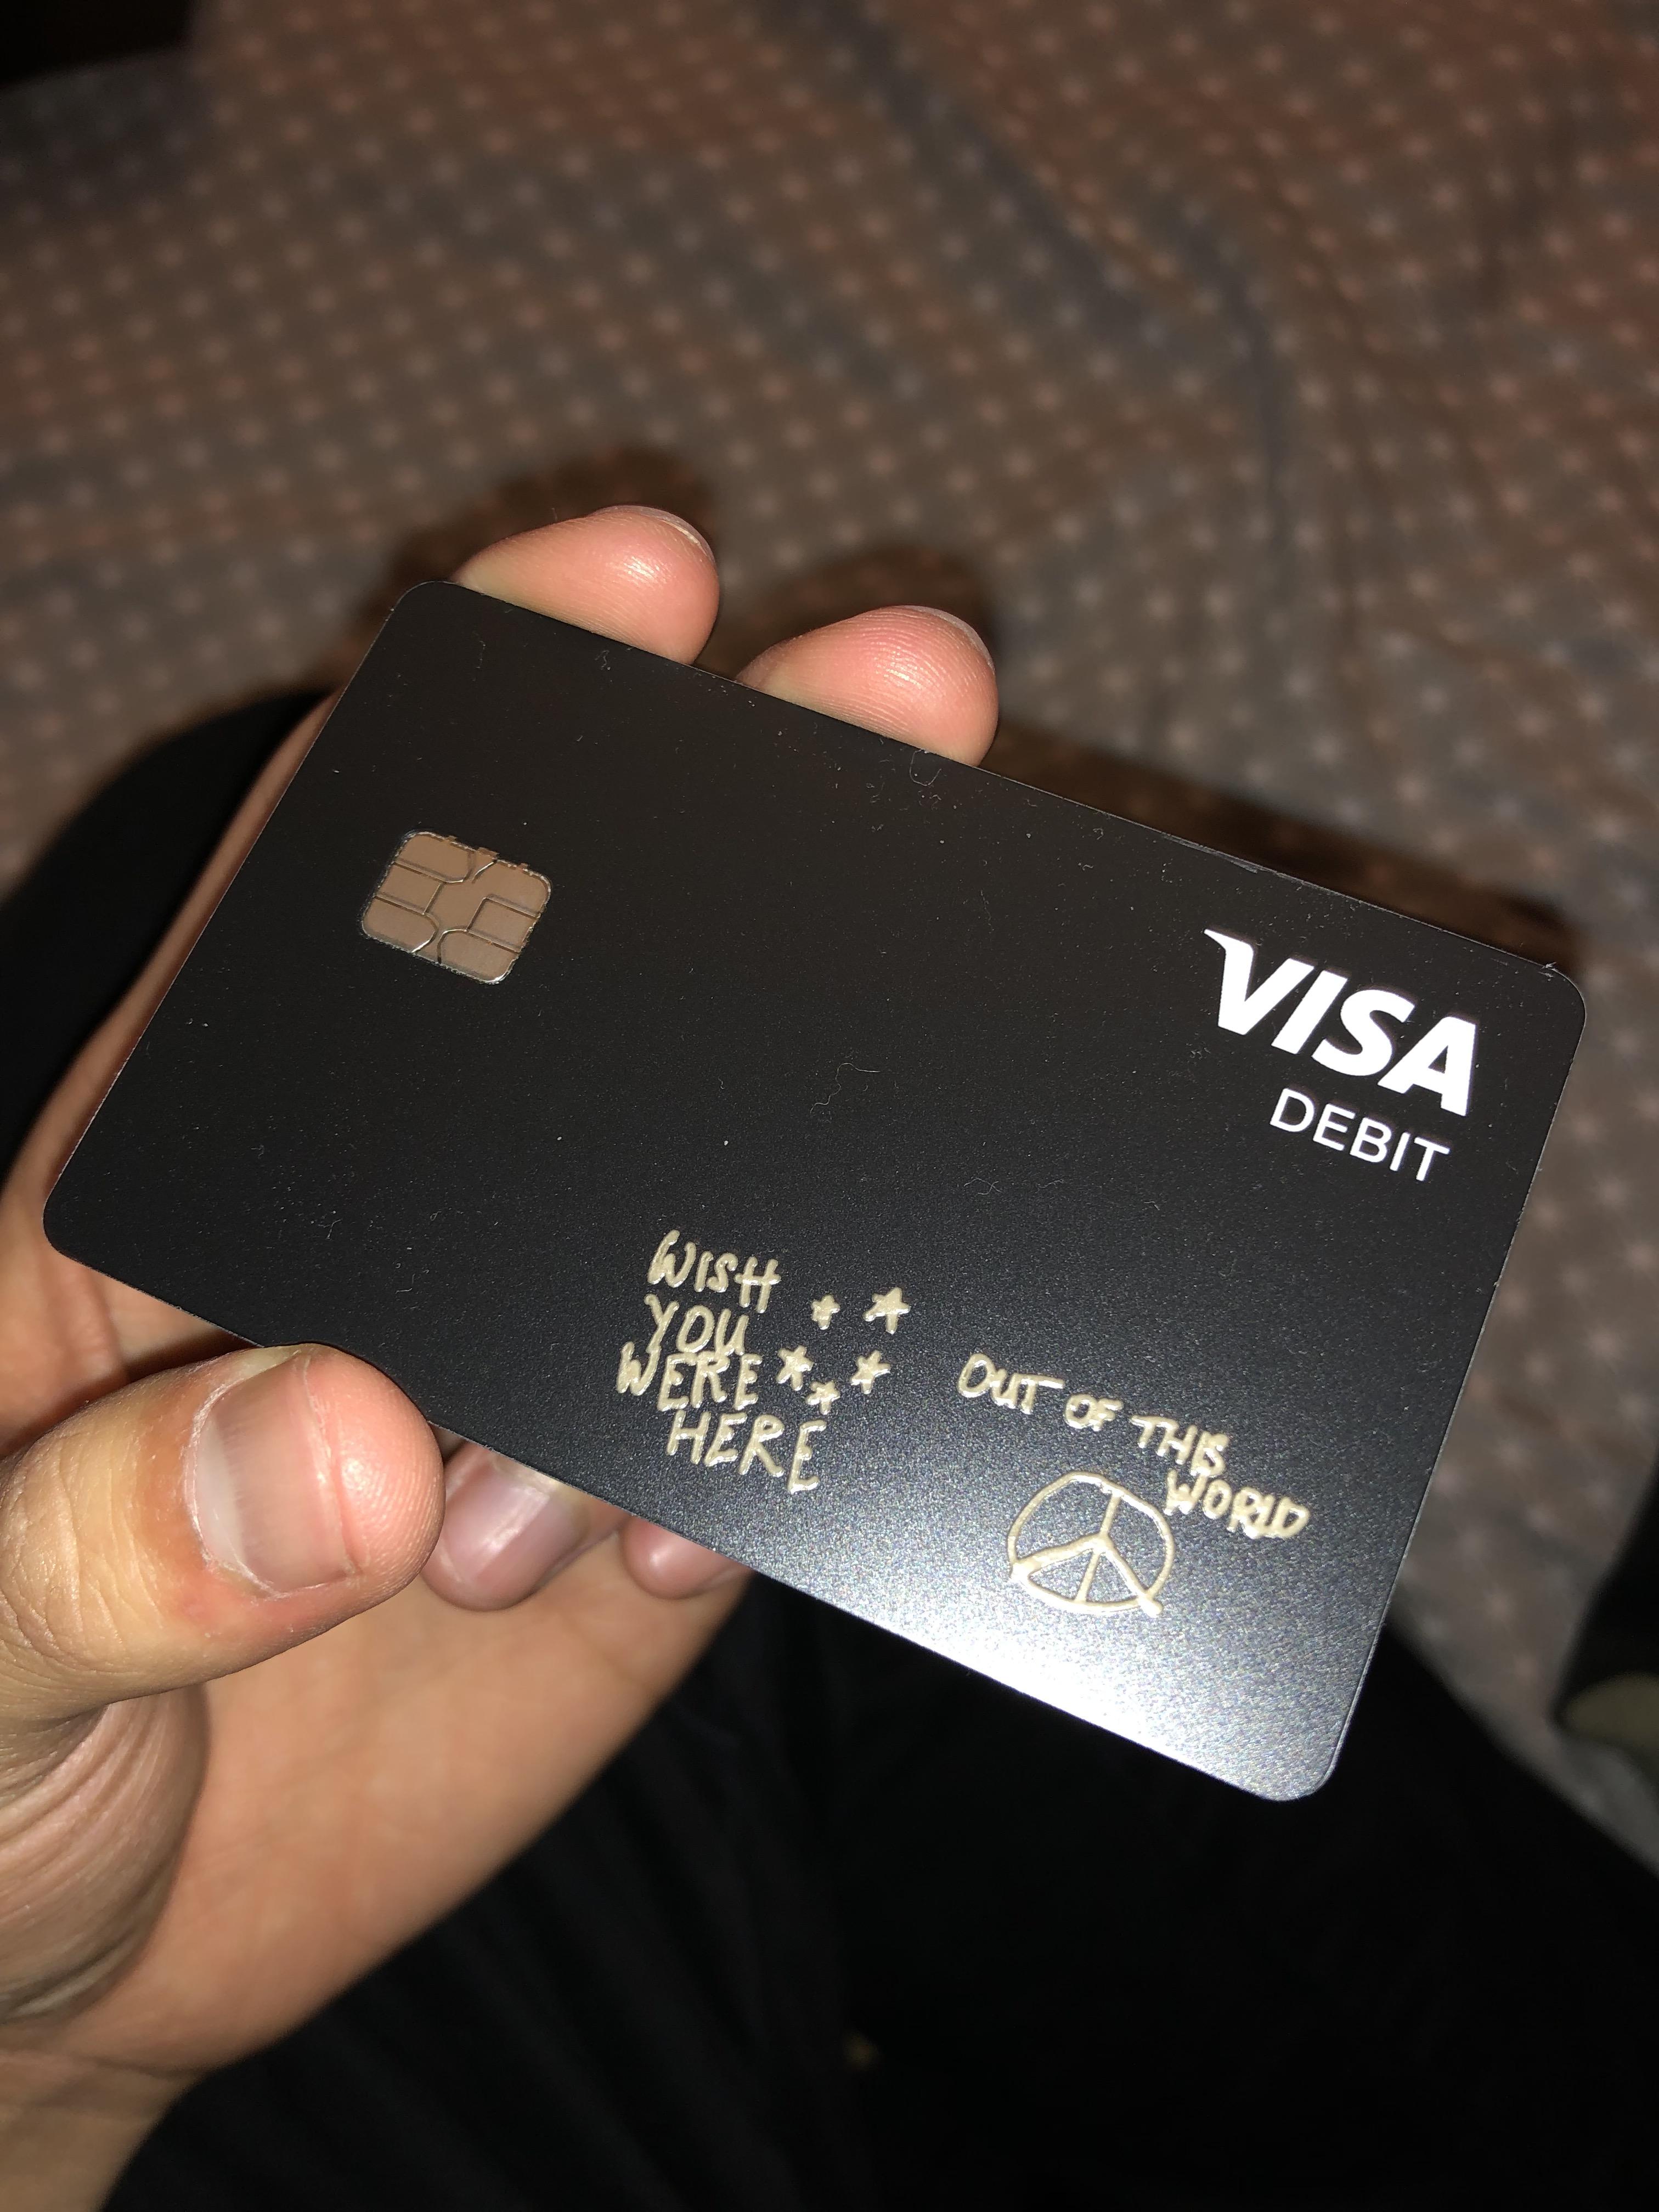 Cashapp card confirmed wavy r/travisscott